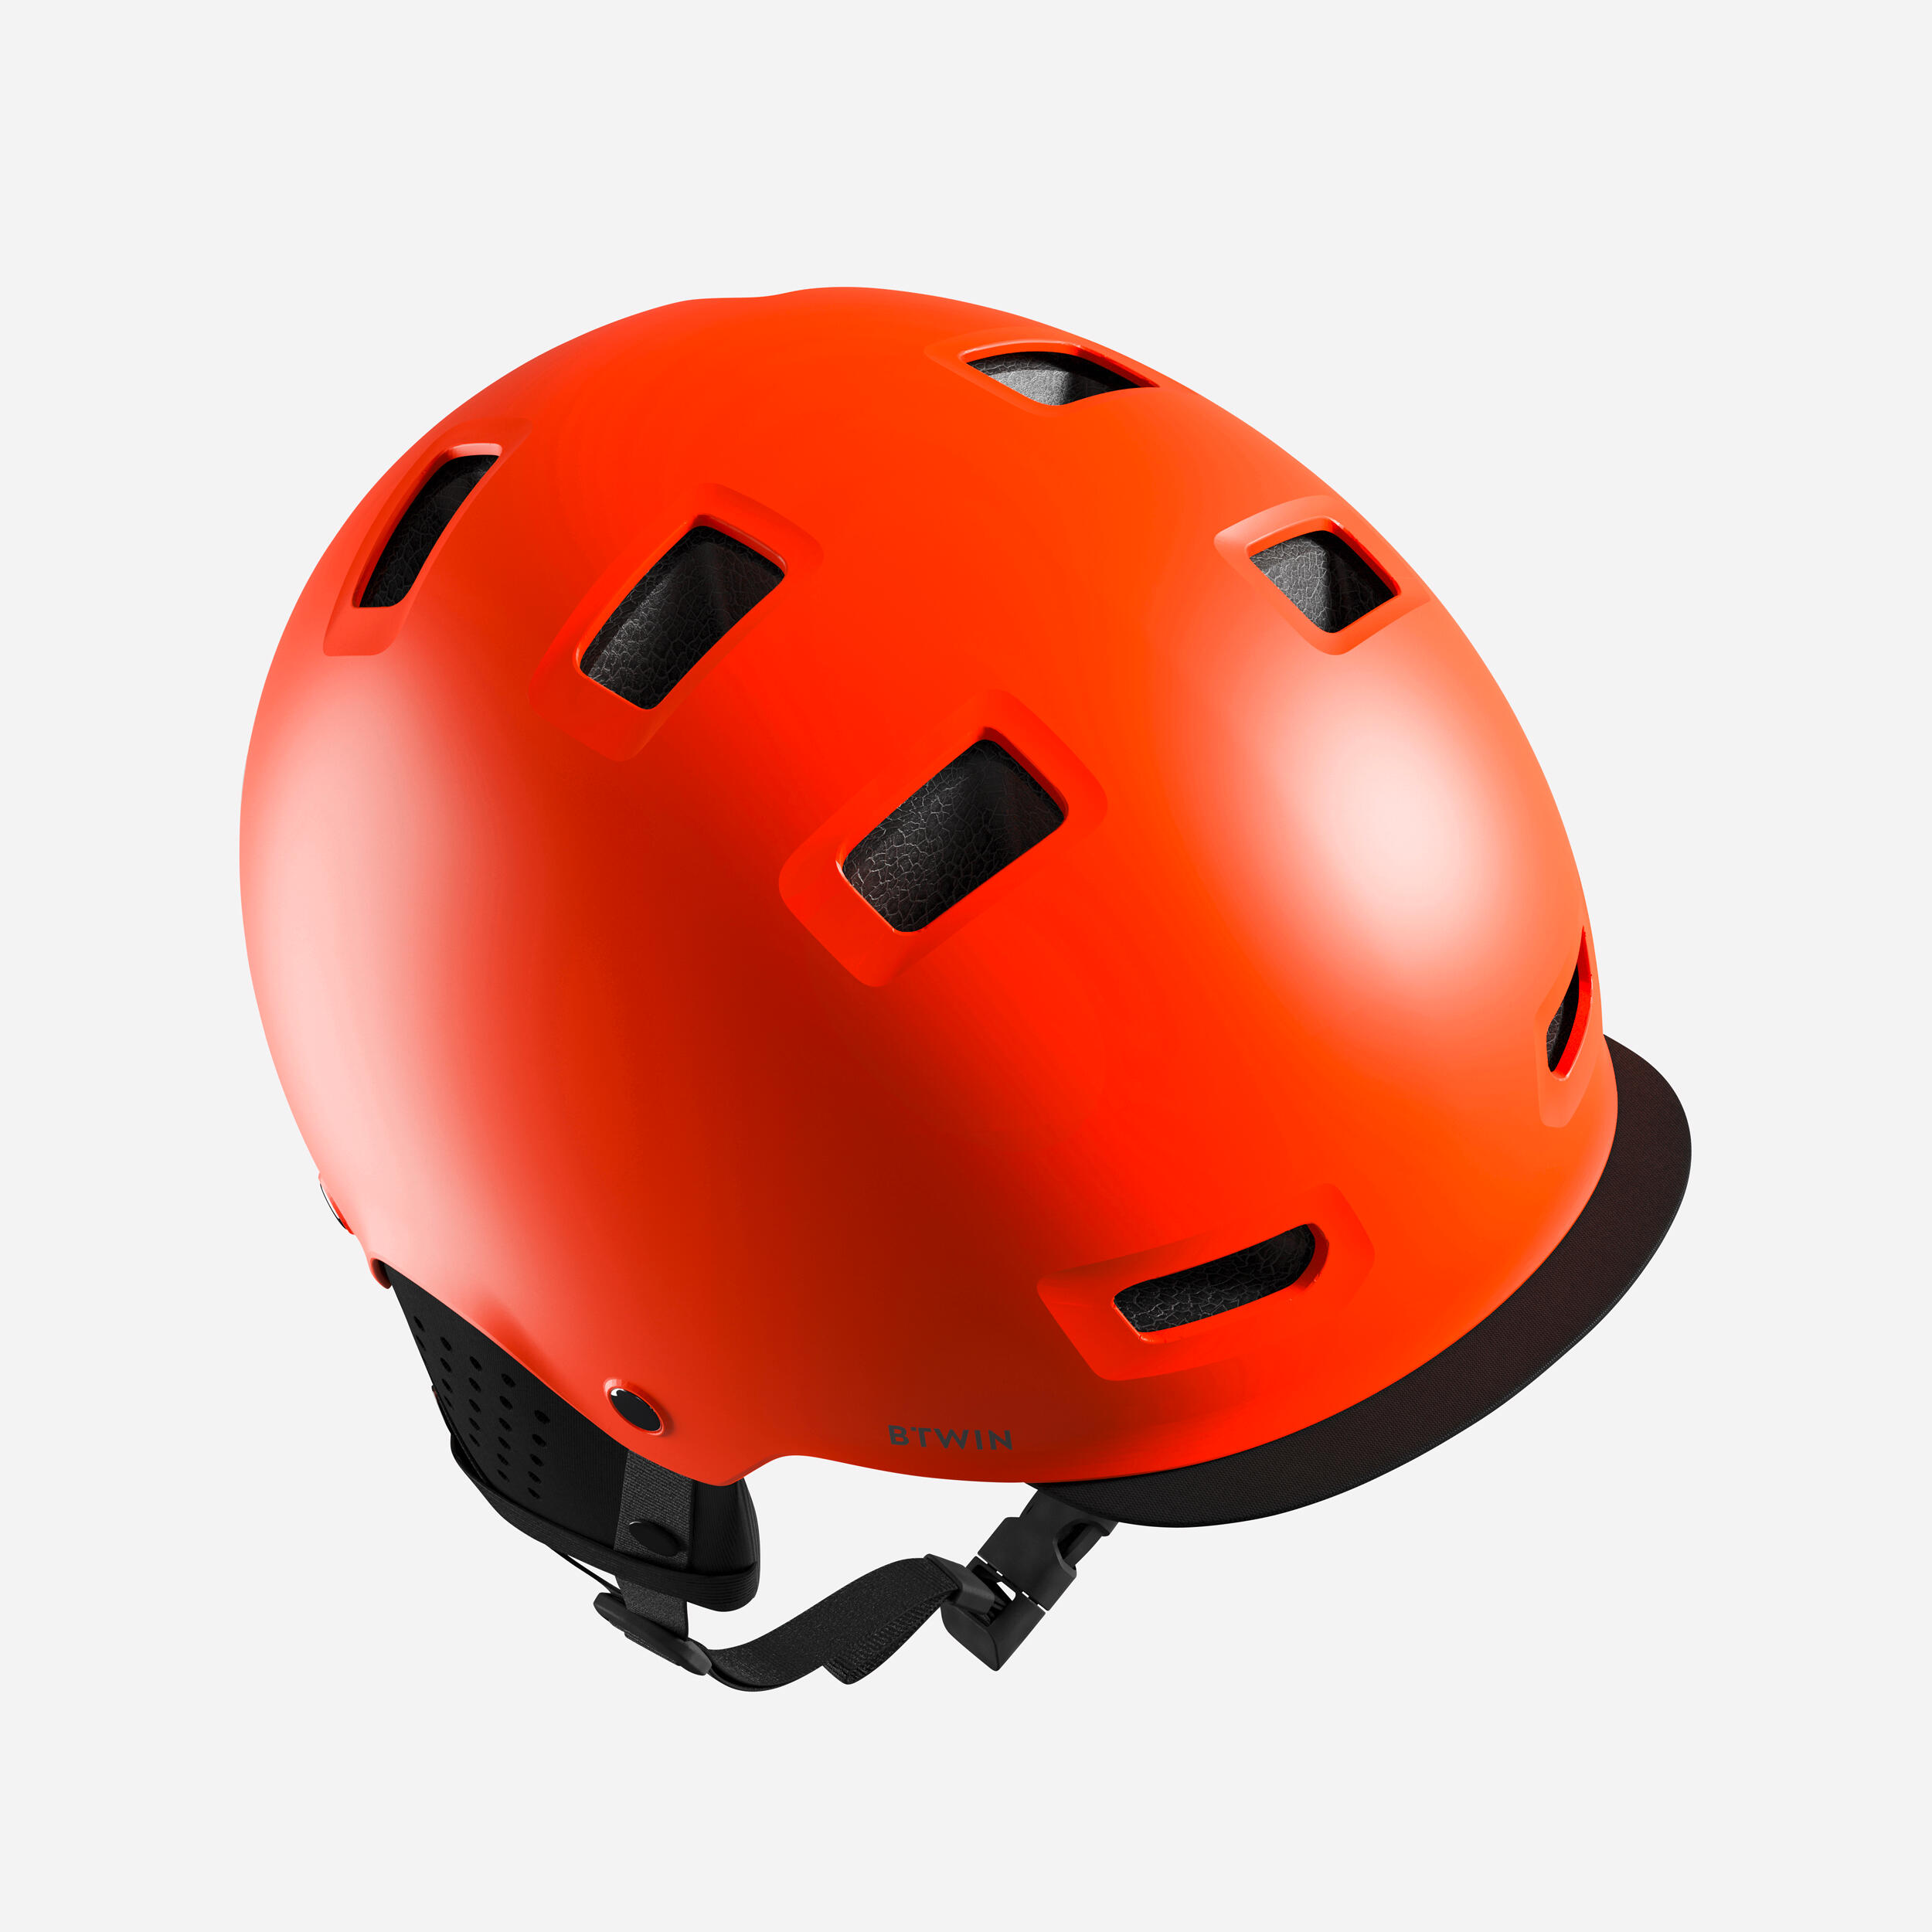 BTWIN City Cycling Bowl Helmet 500 - Neon Orange